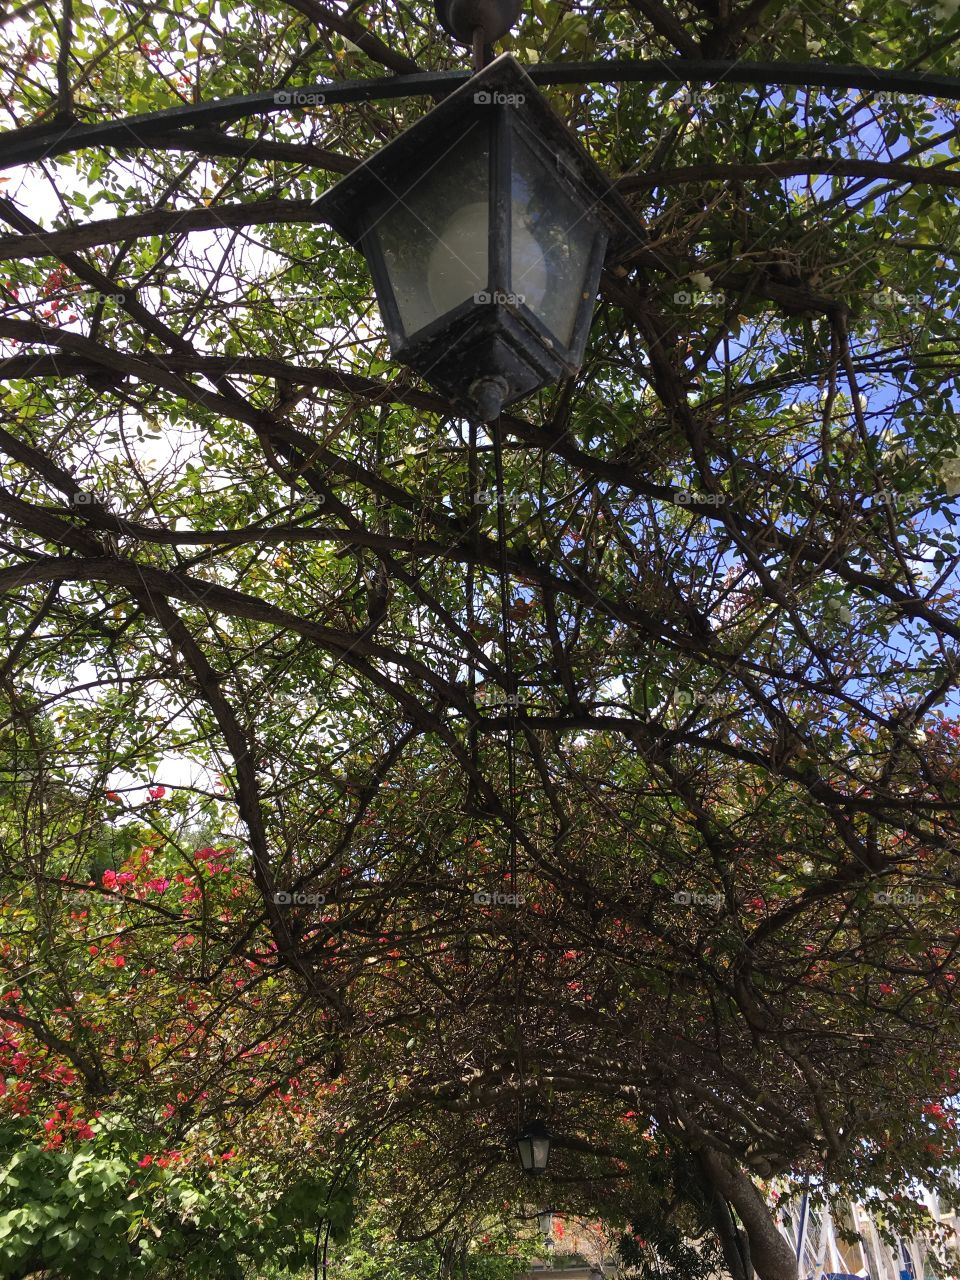 Lantern hanging from vines